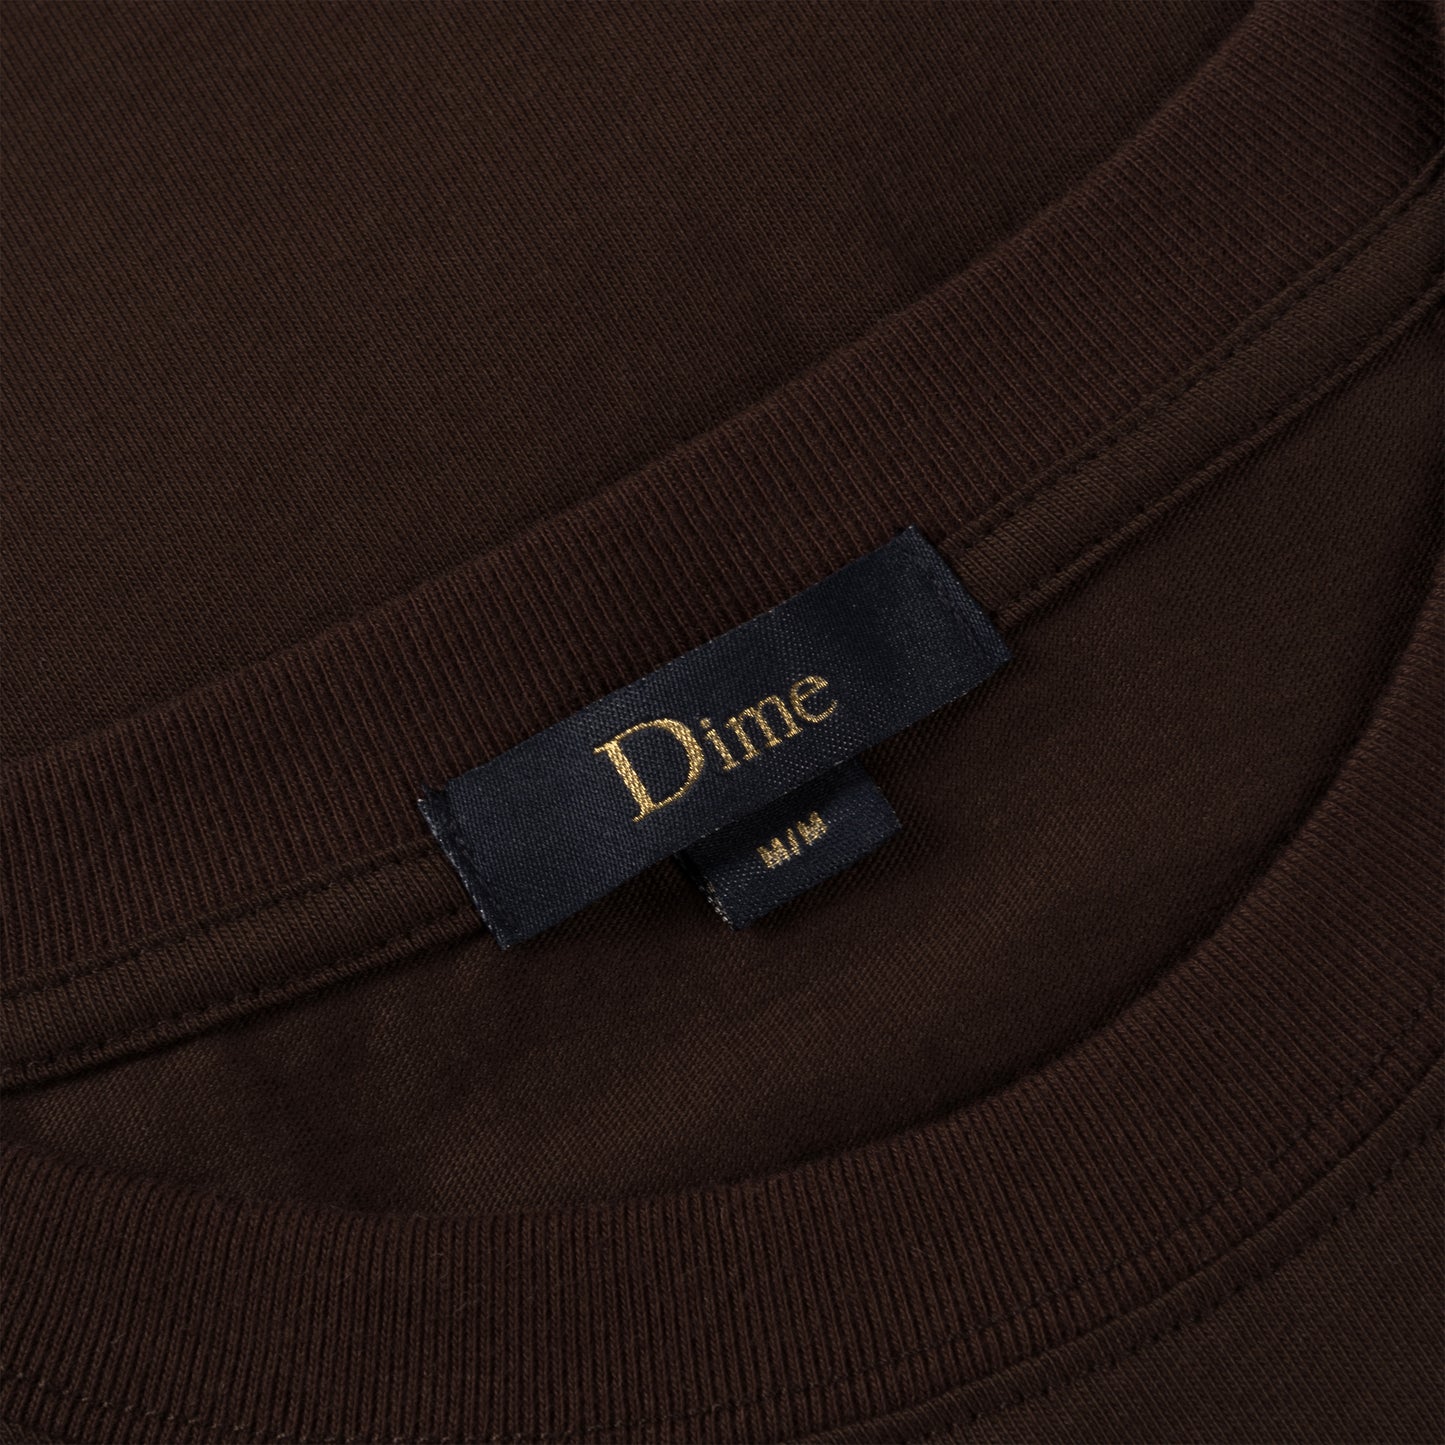 Dime - Classic Small Logo T-Shirt - Deep Brown